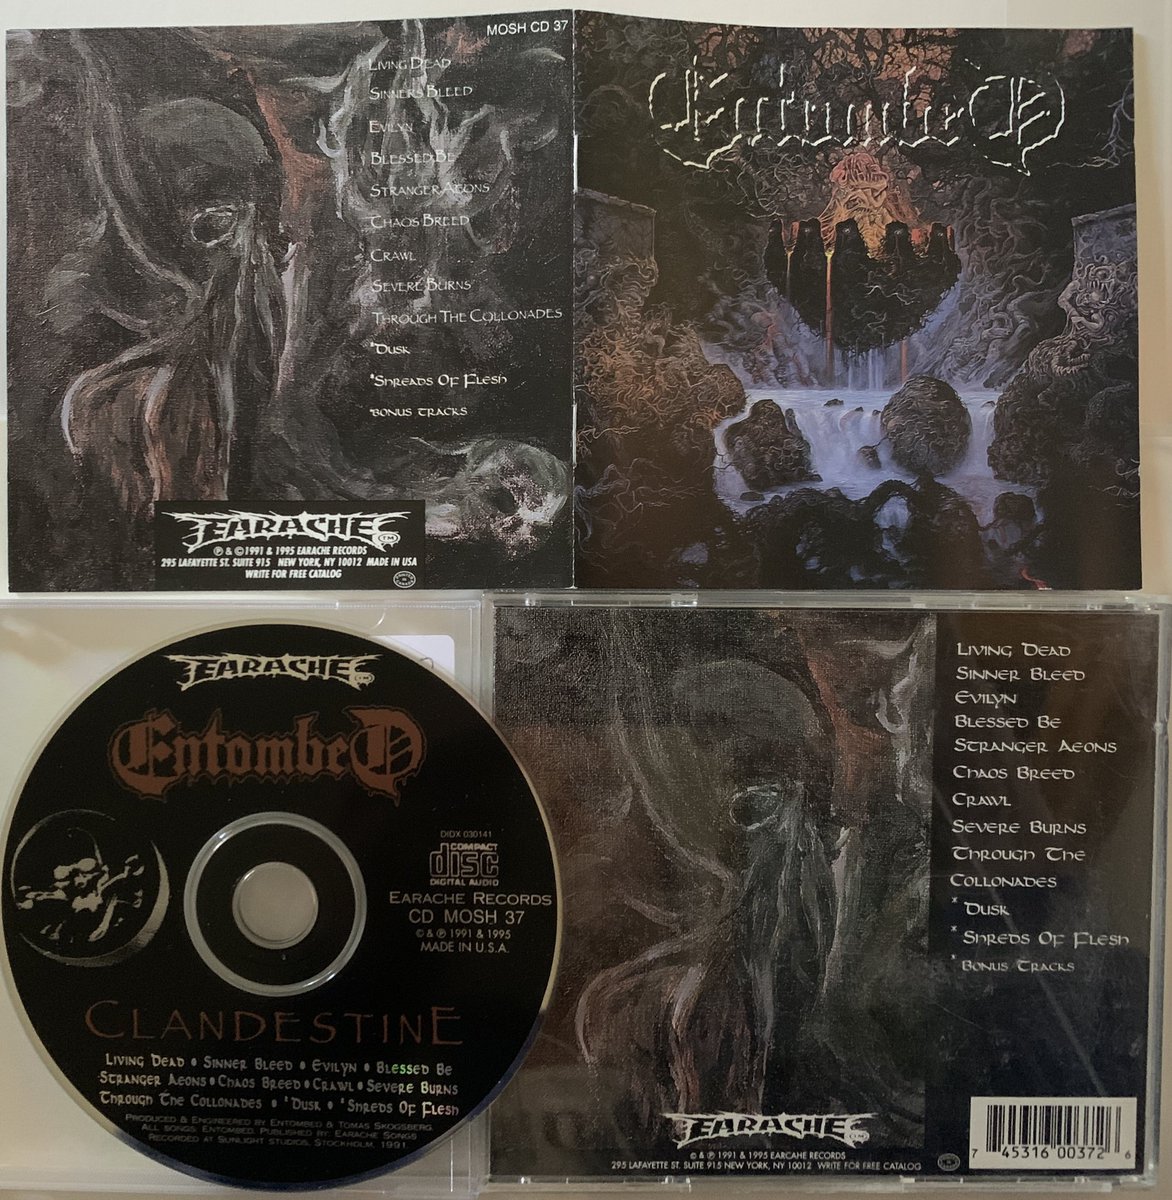 🤘ENTOMBED 🤟 Clandestine
#NowPIaying #deathmetal #music
#heavymetal #Entombed #metal
@TheEntombed @EaracheRecords